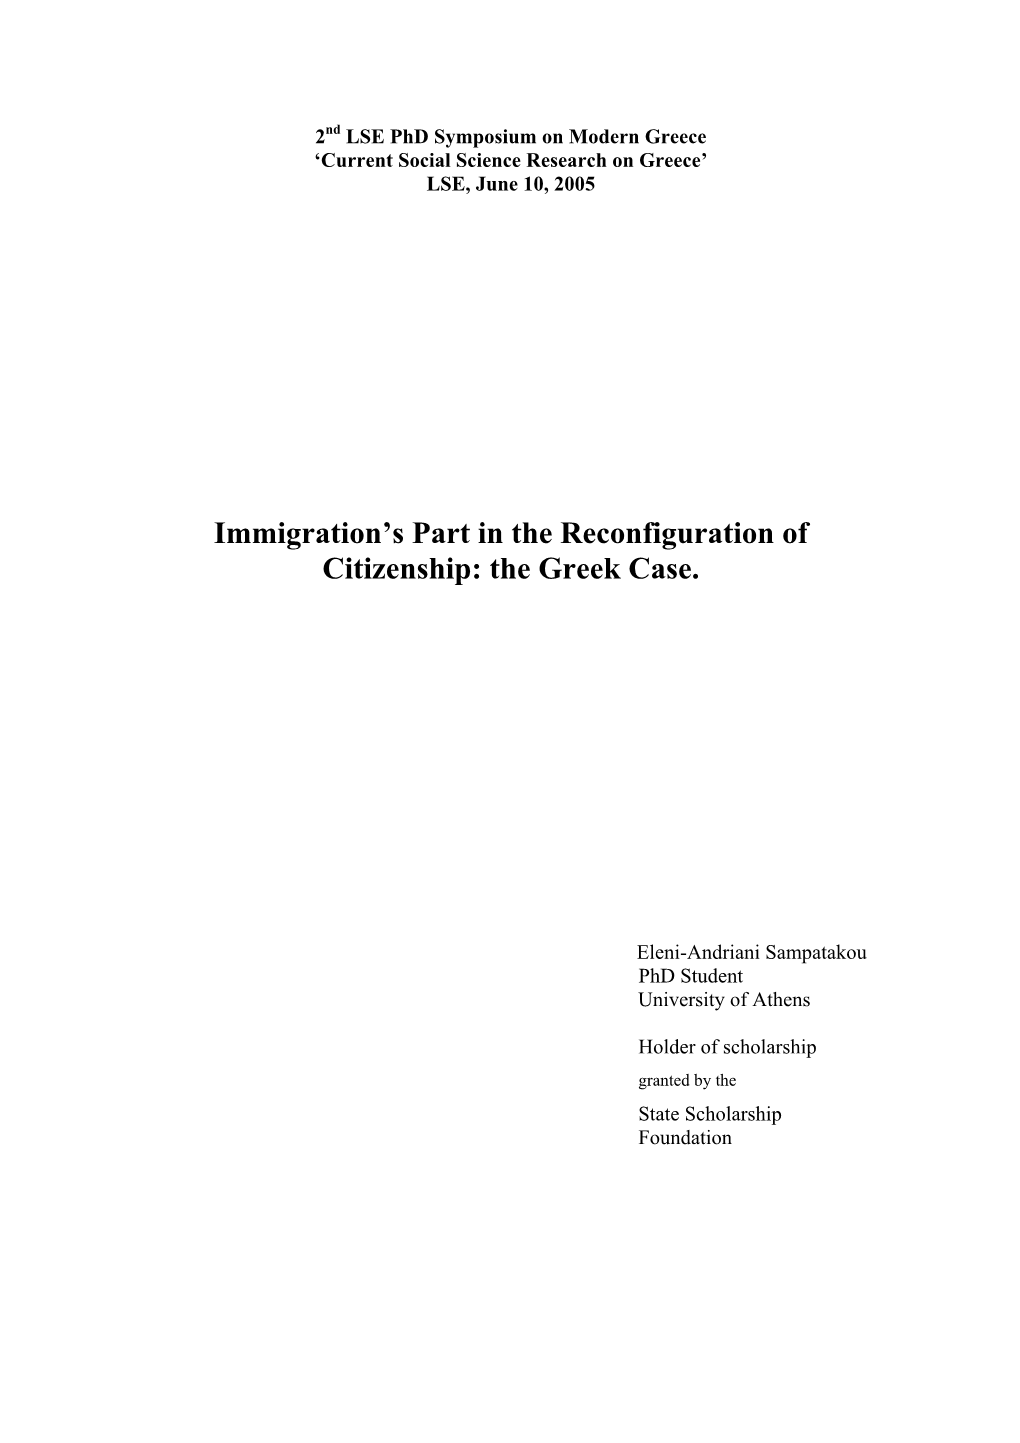 Migration and Minorities I